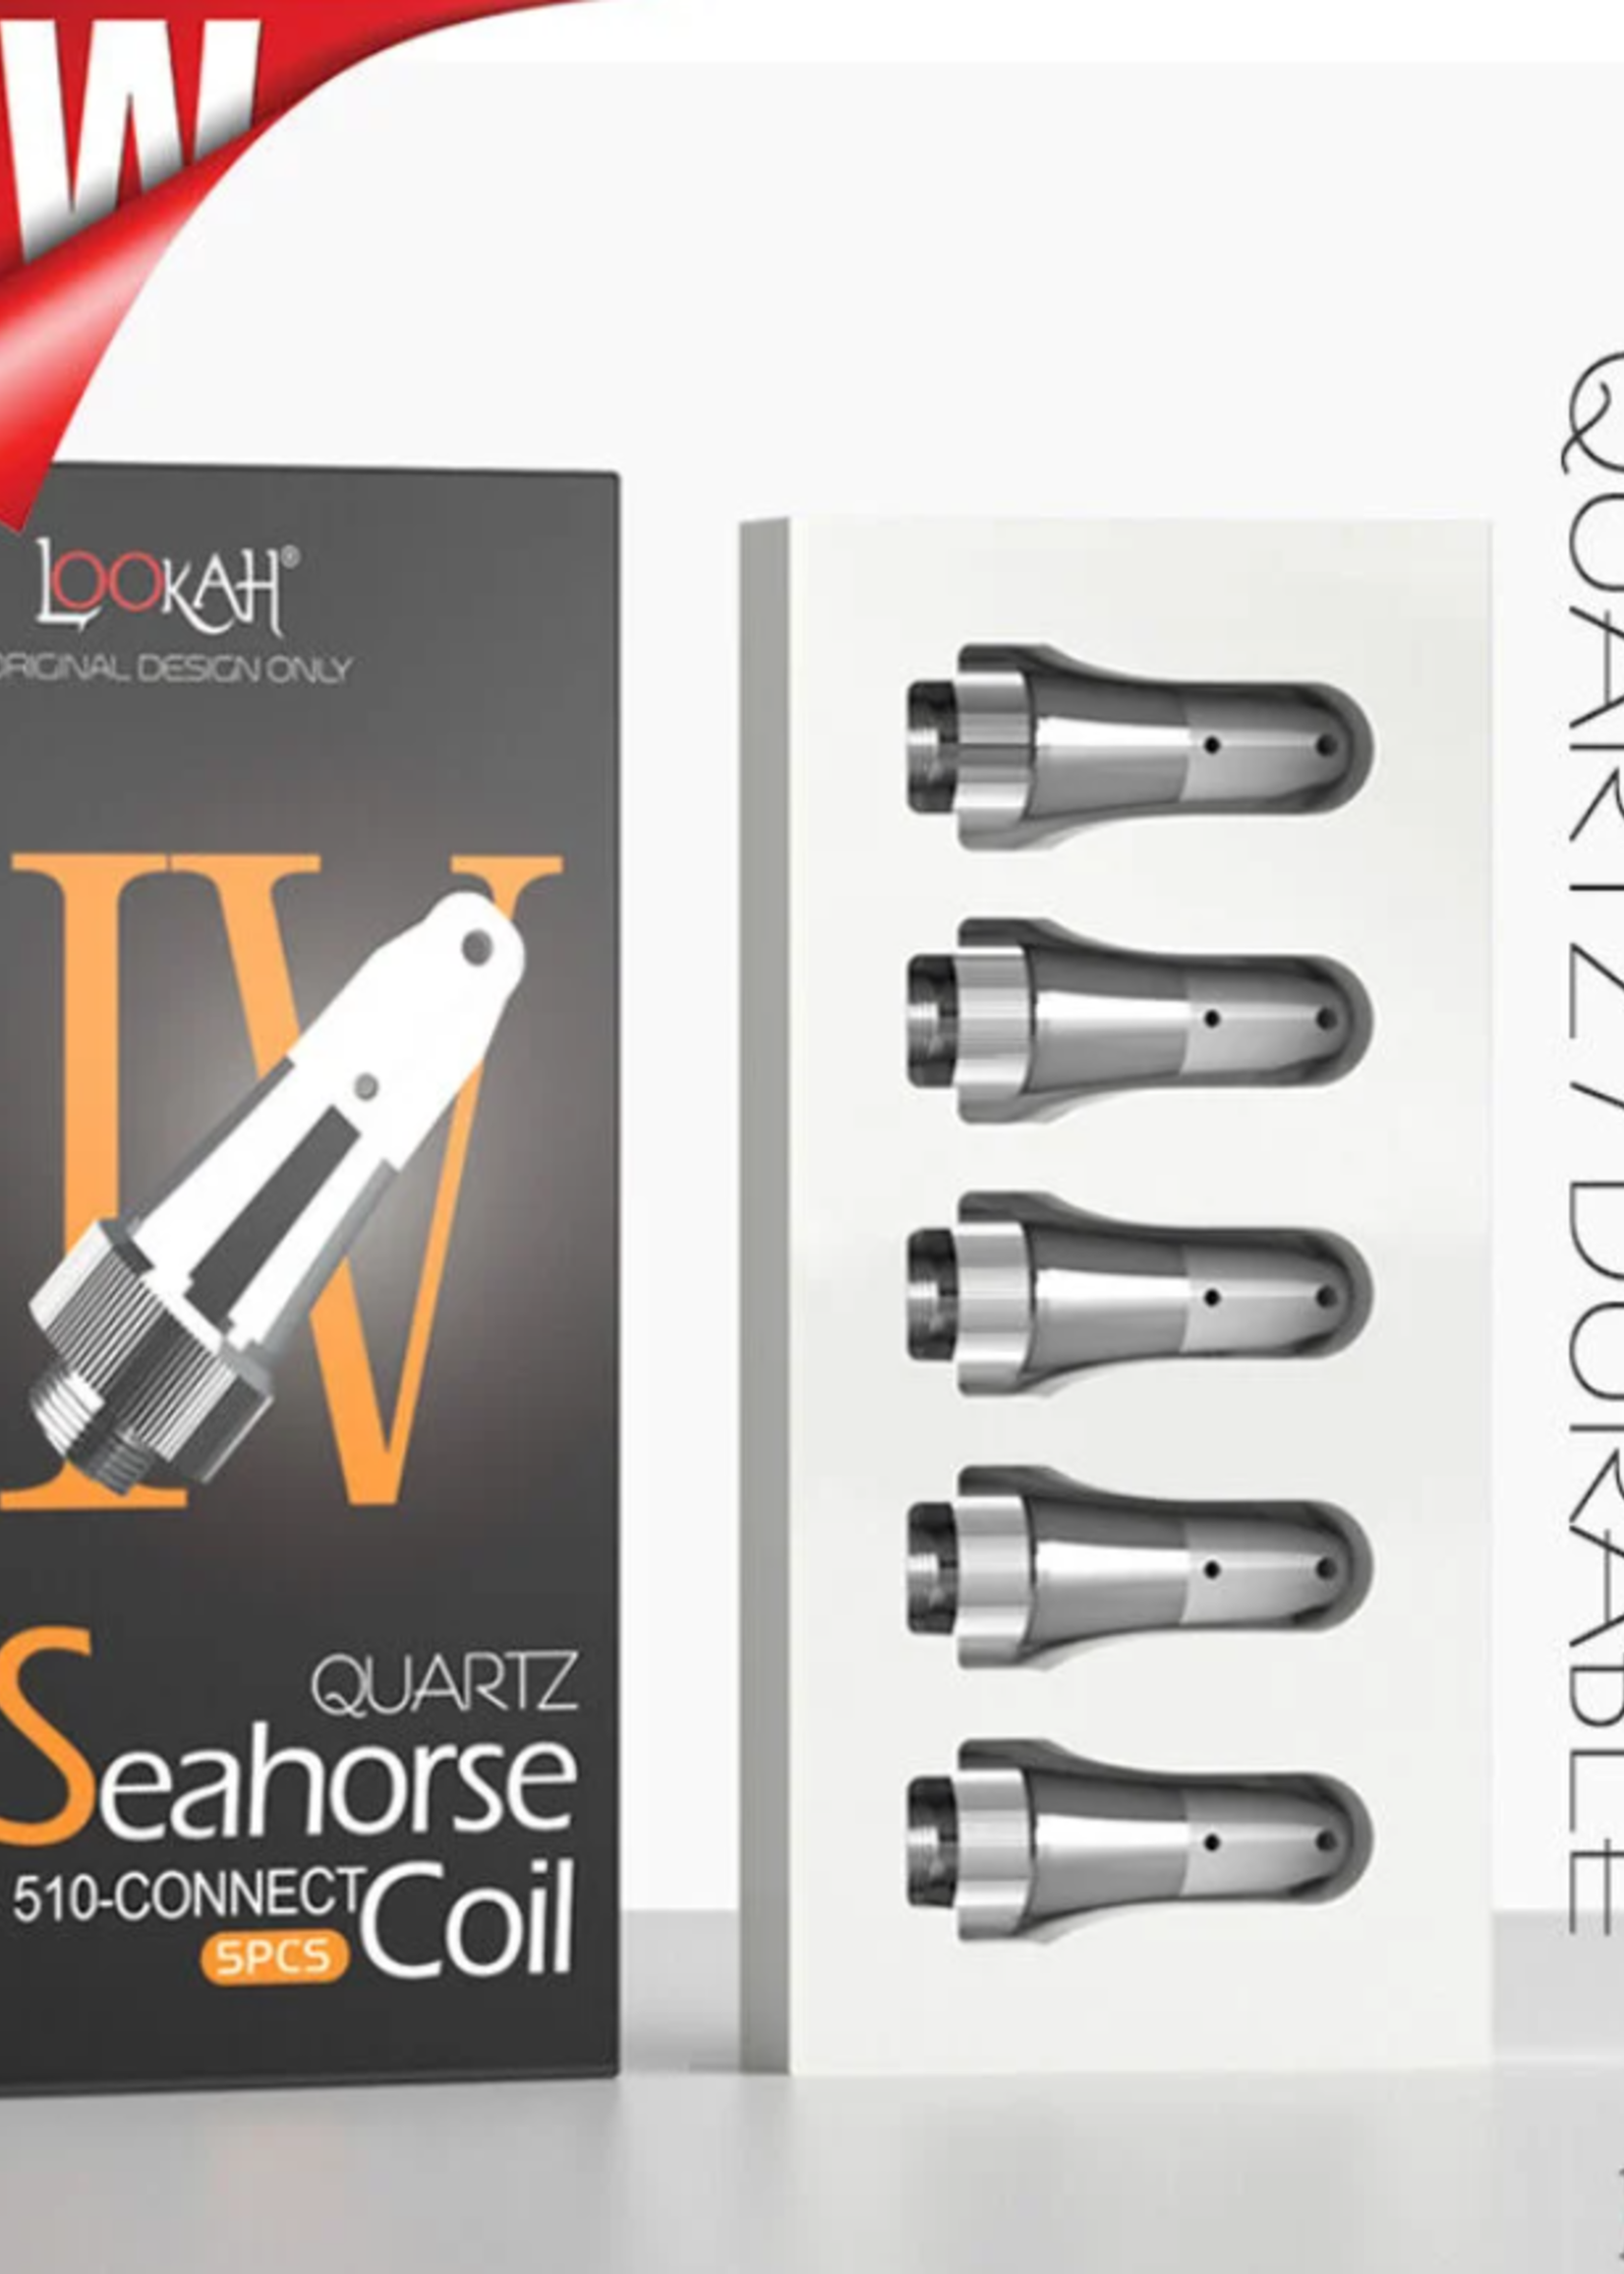 Lookah Lookah Seahorse IV Quartz Replacement Coils - Pack of 5 single